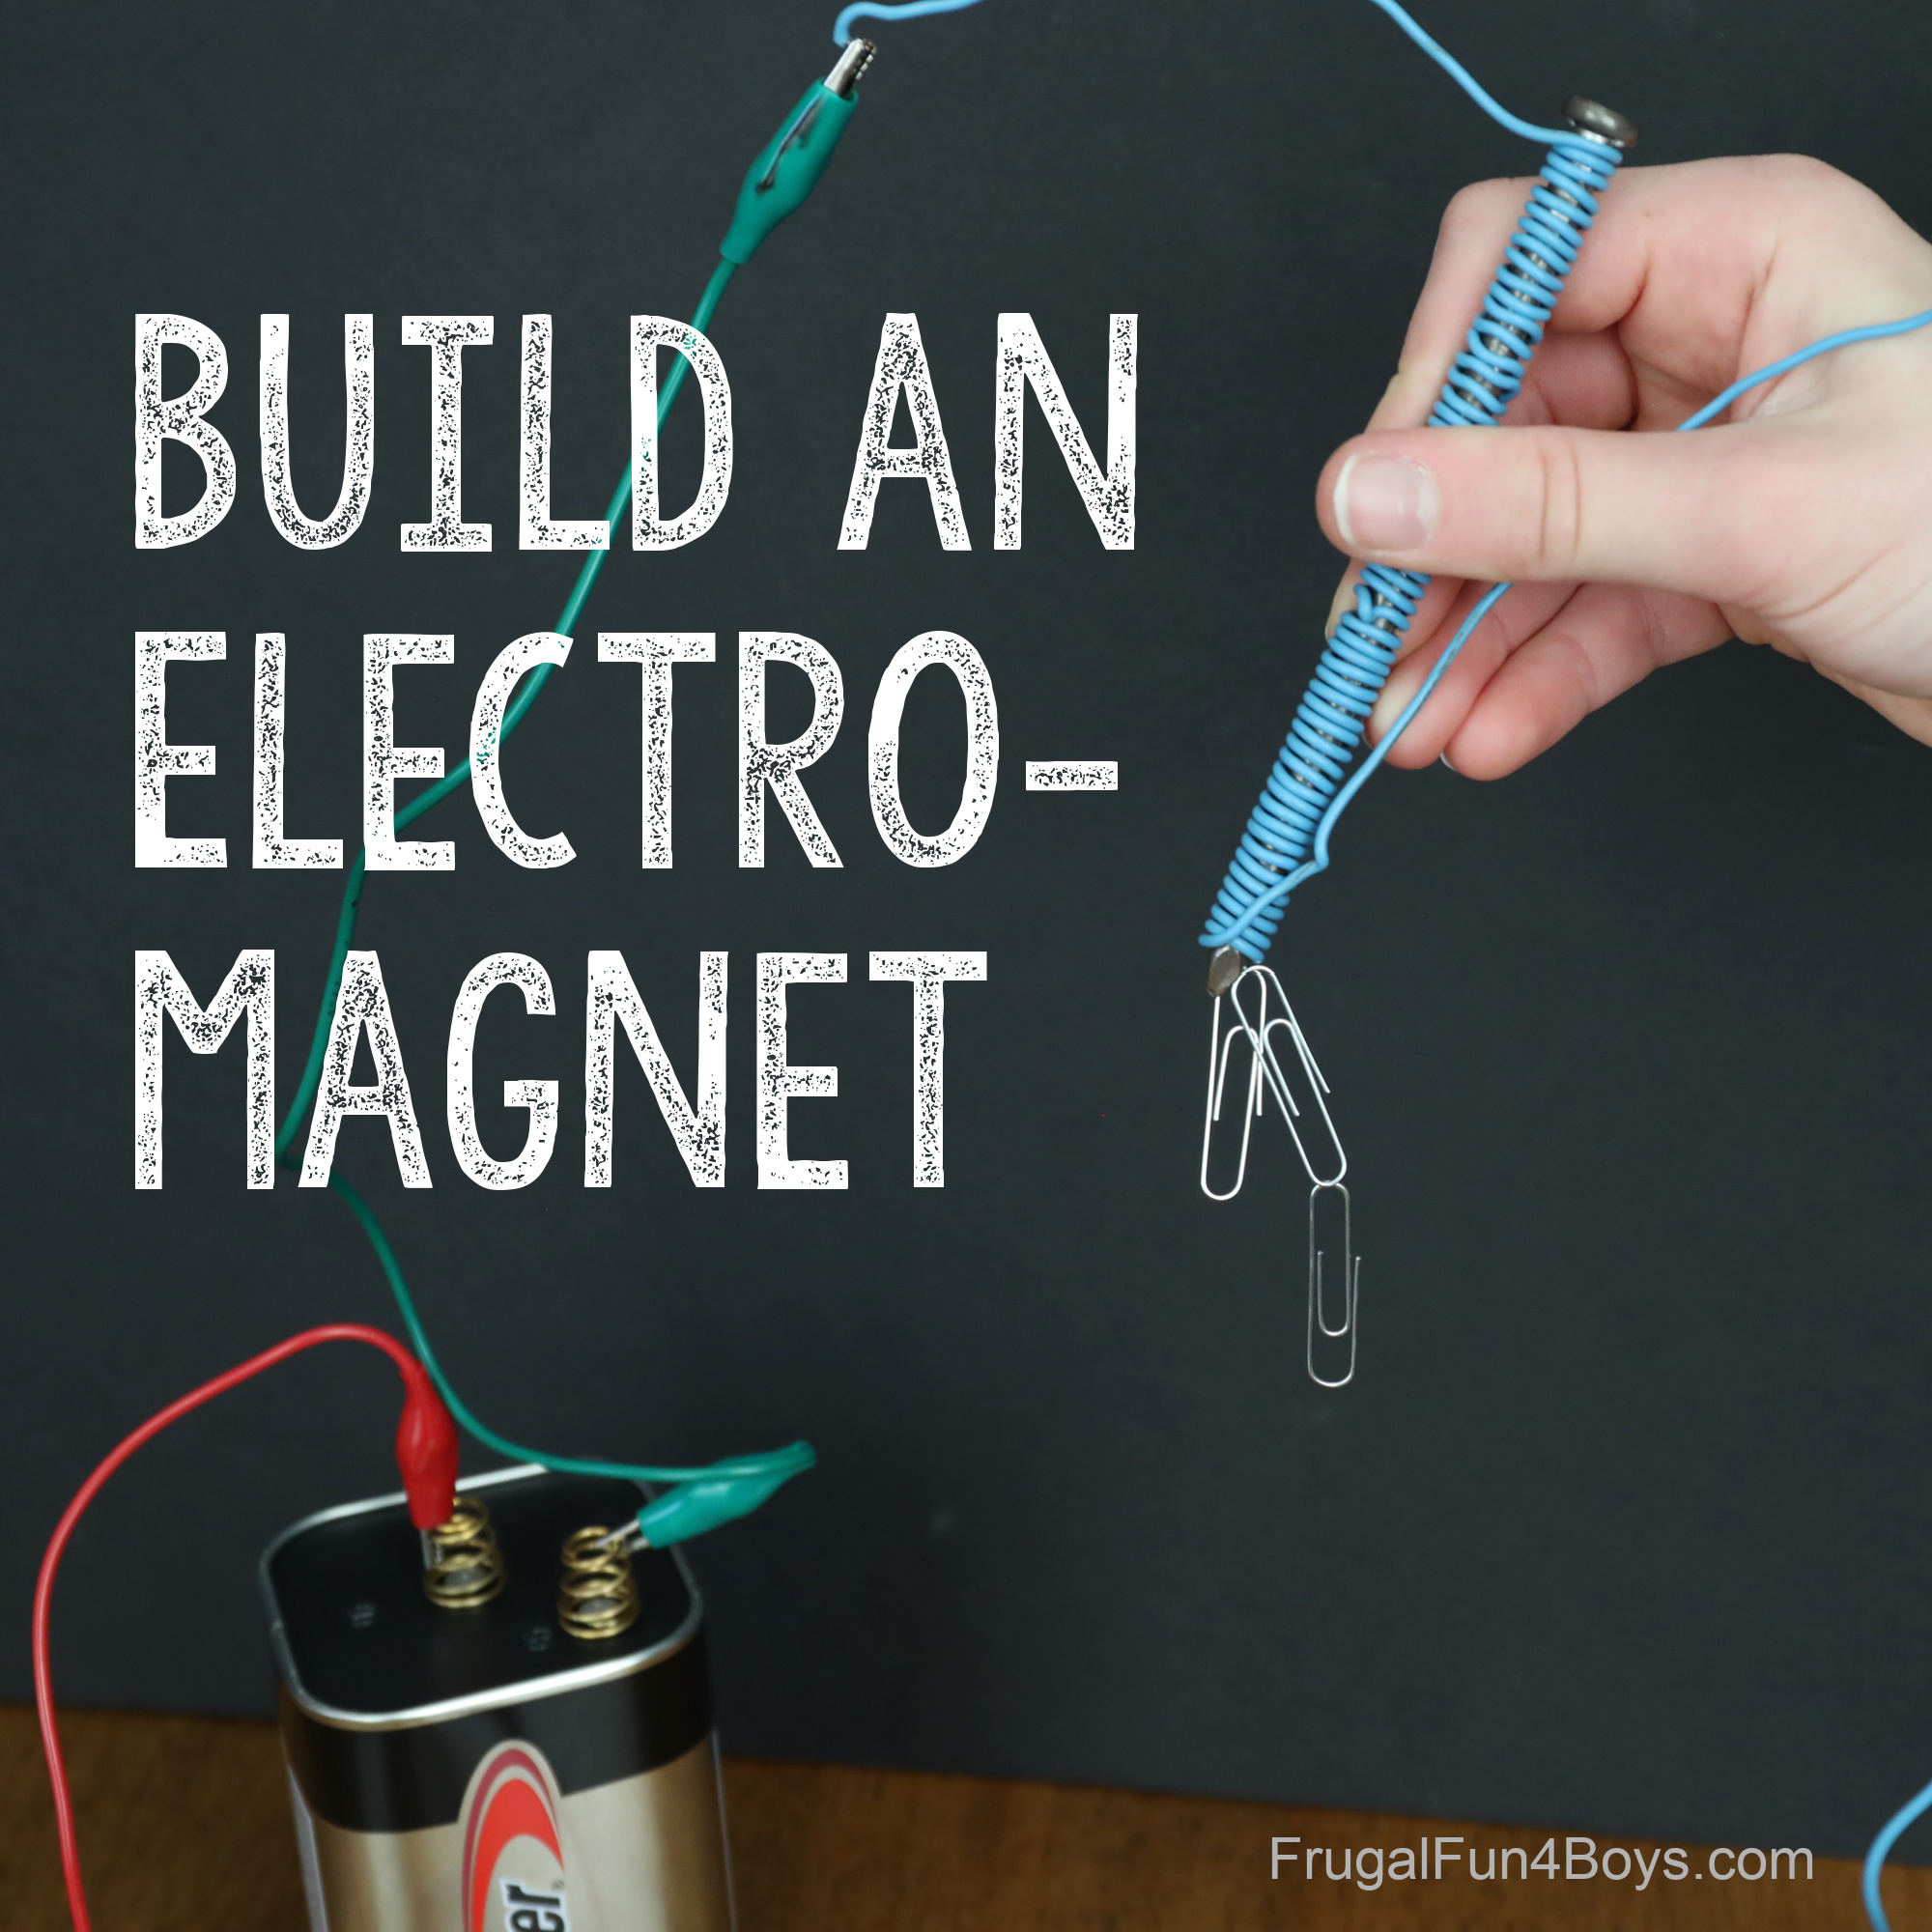  Playz Electric Drawing Kit for Kids - Motorized DIY